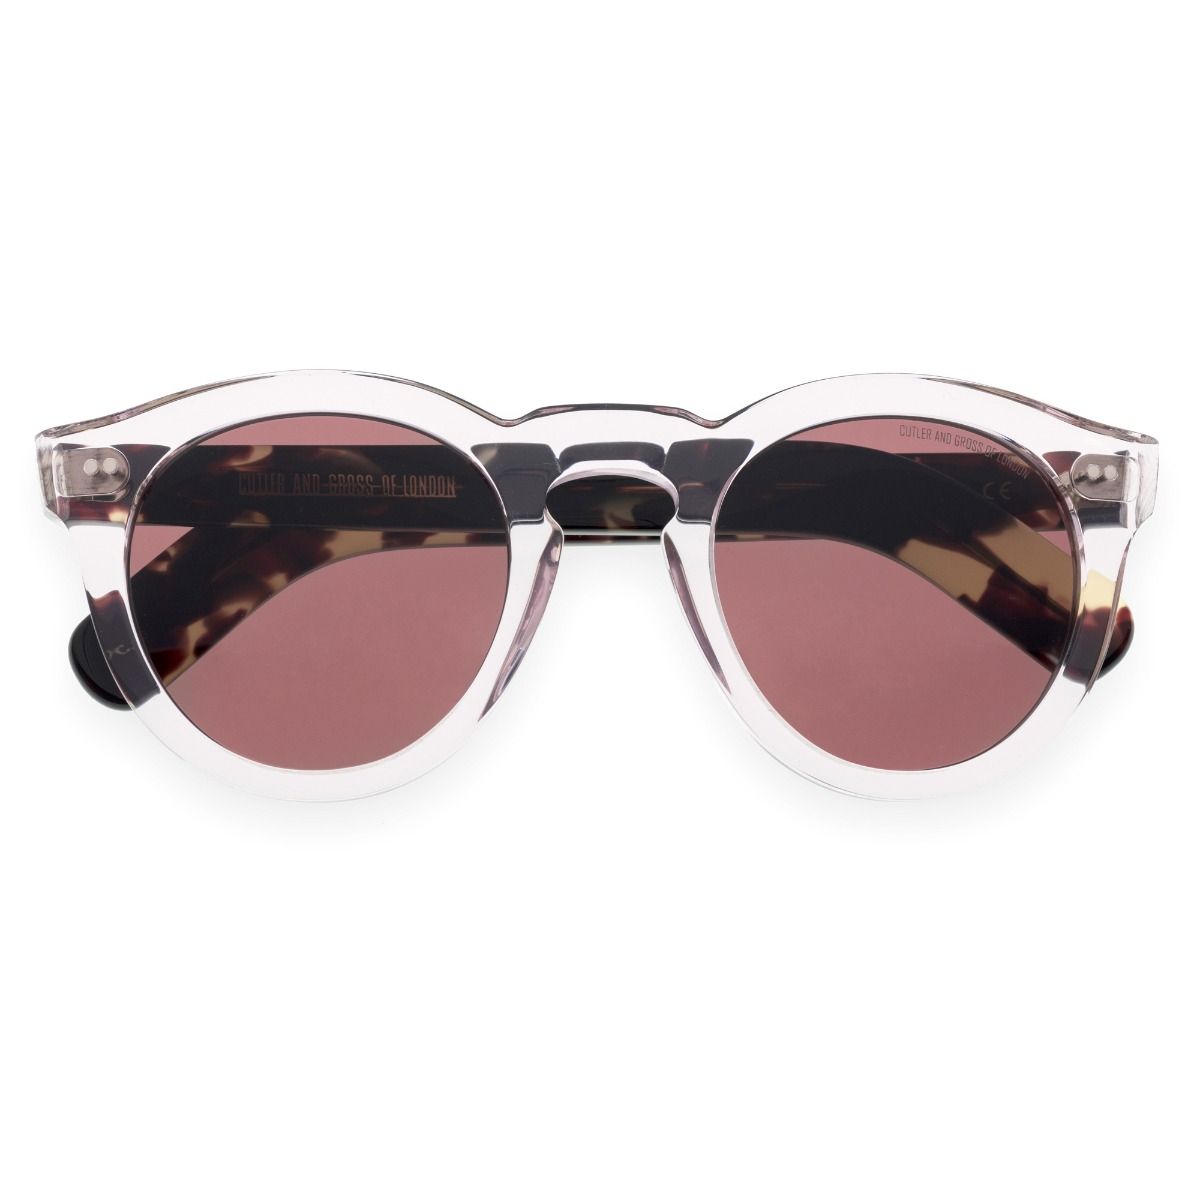 0734 Round Sunglasses-Nude Pink